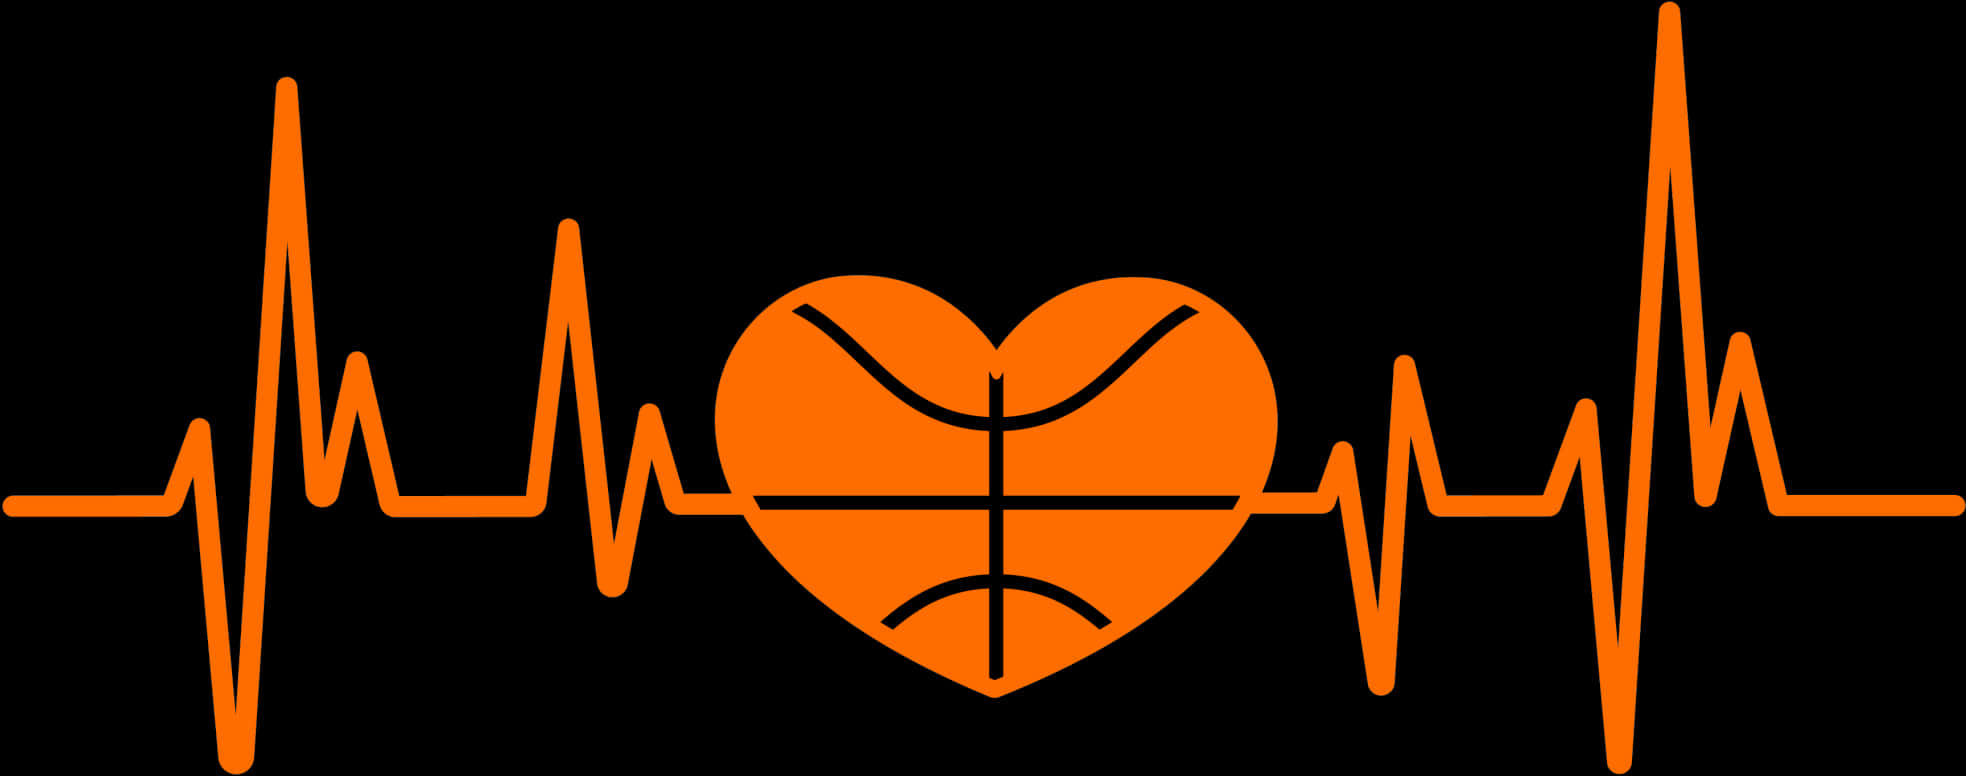 Heartbeat Electrocardiogramwith Basketball PNG image